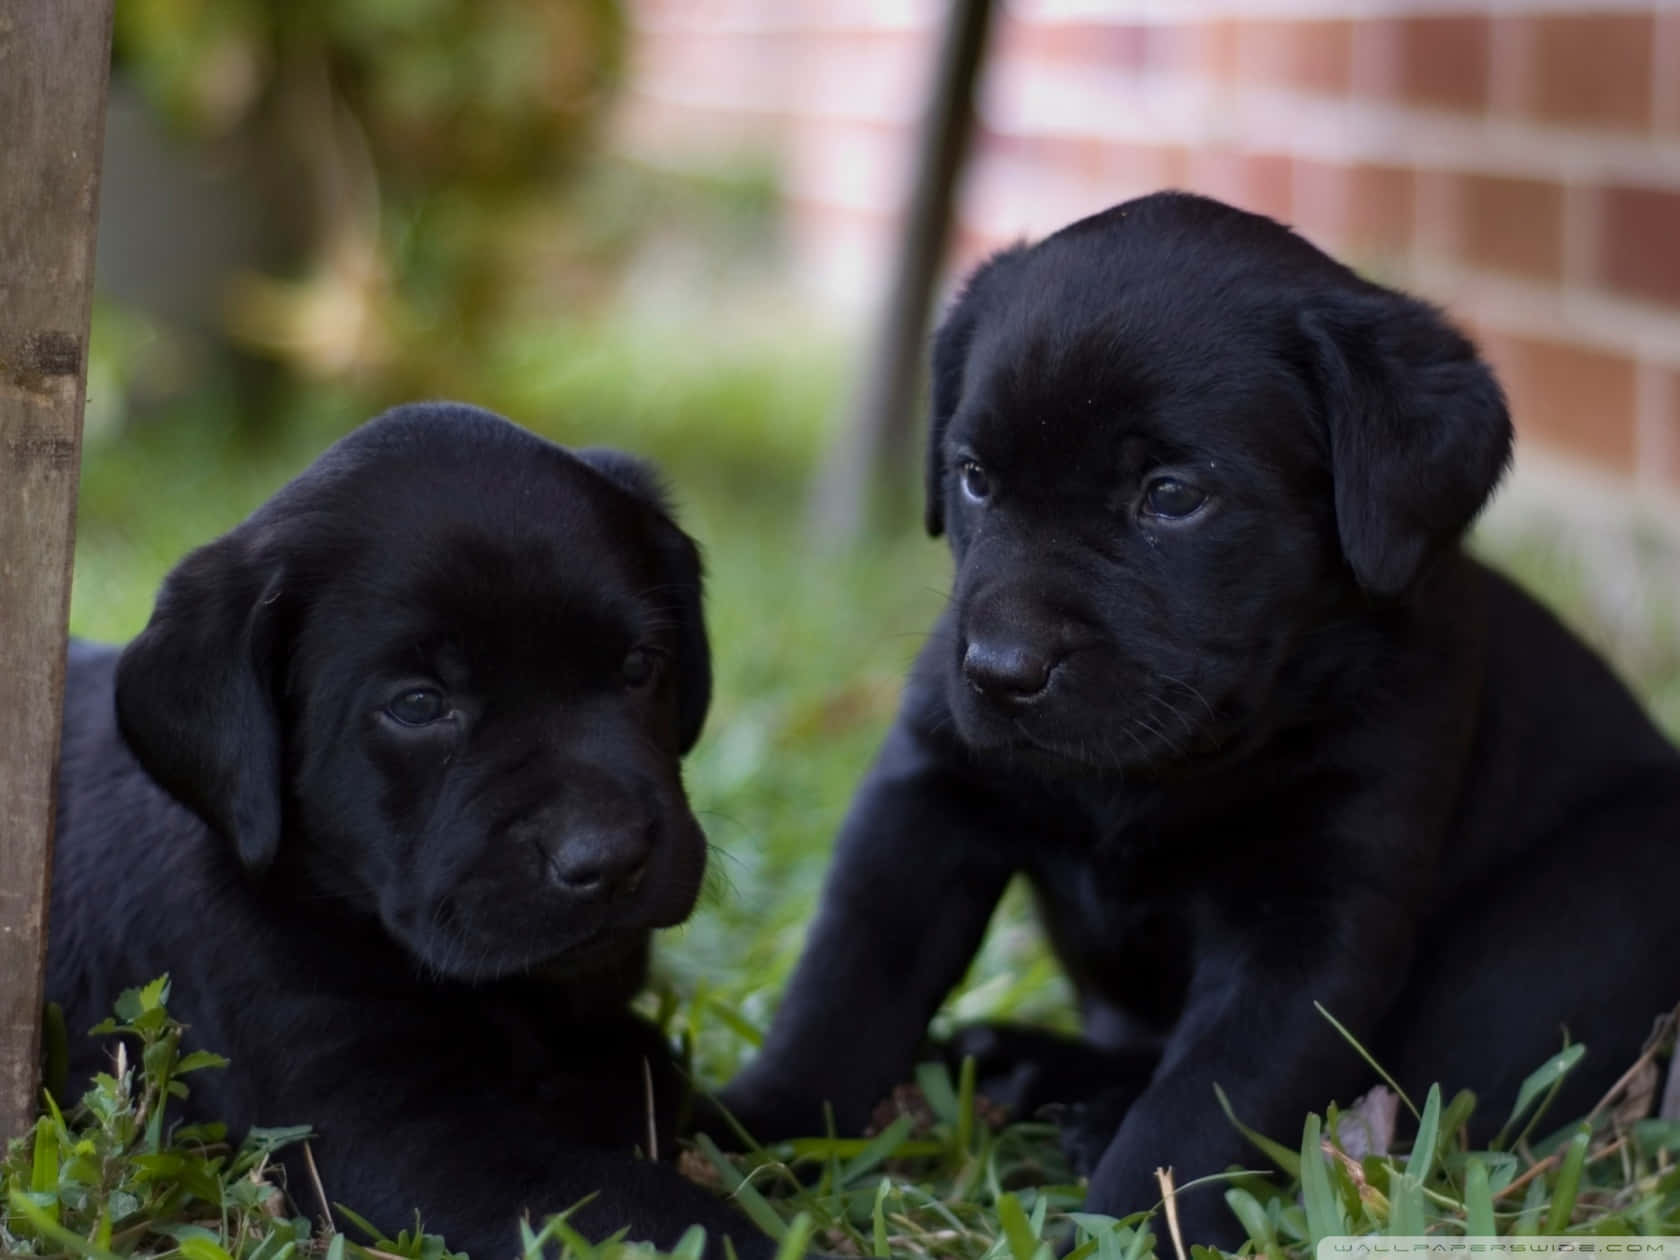 cutest black lab puppy ever